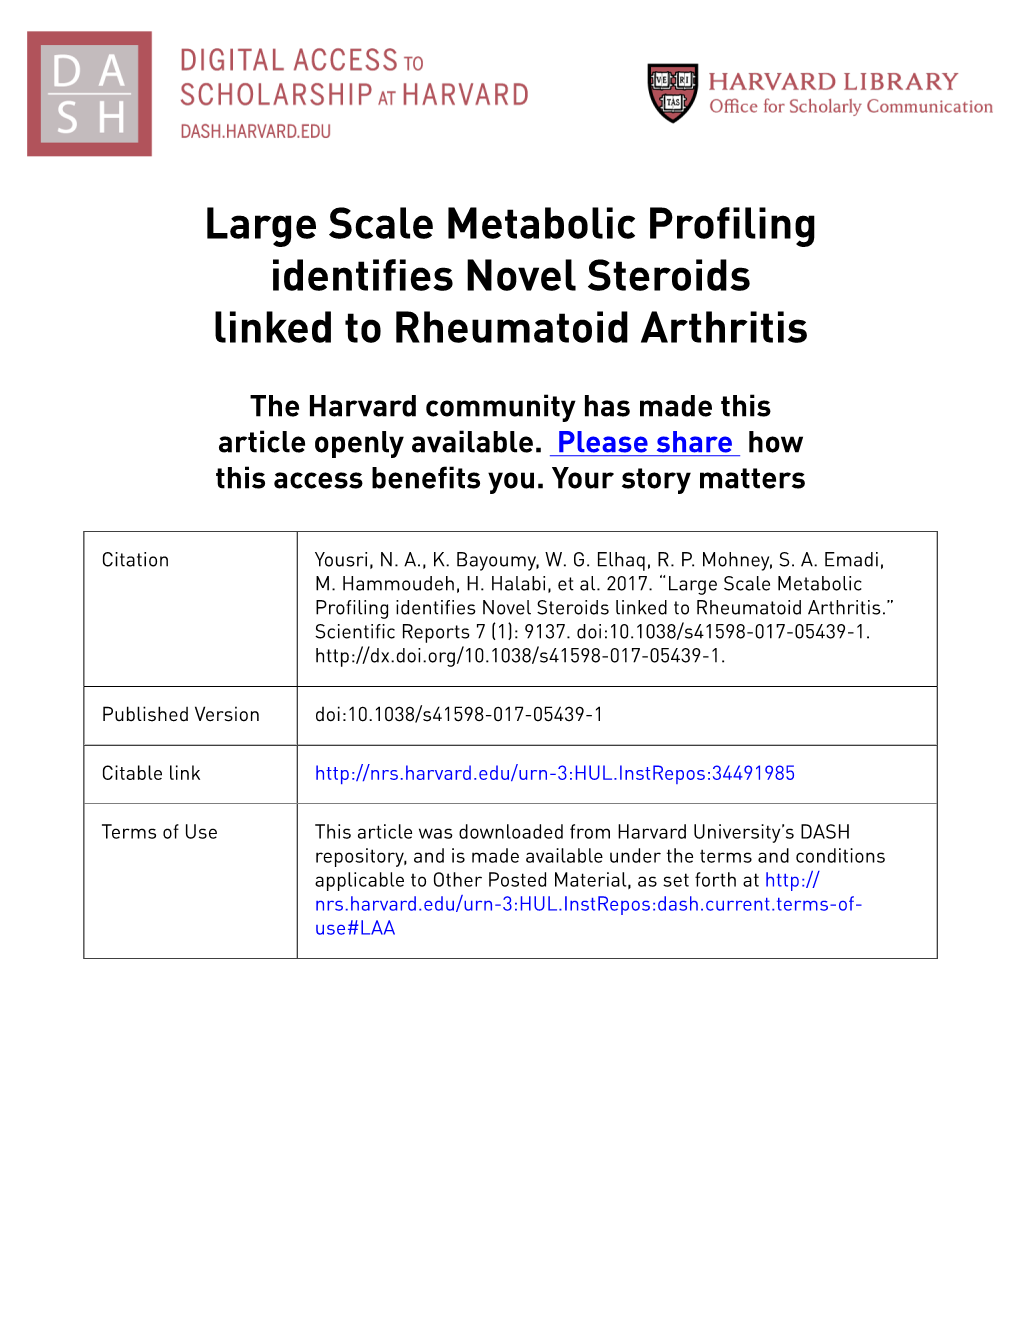 Large Scale Metabolic Profiling Identifies Novel Steroids Linked to Rheumatoid Arthritis